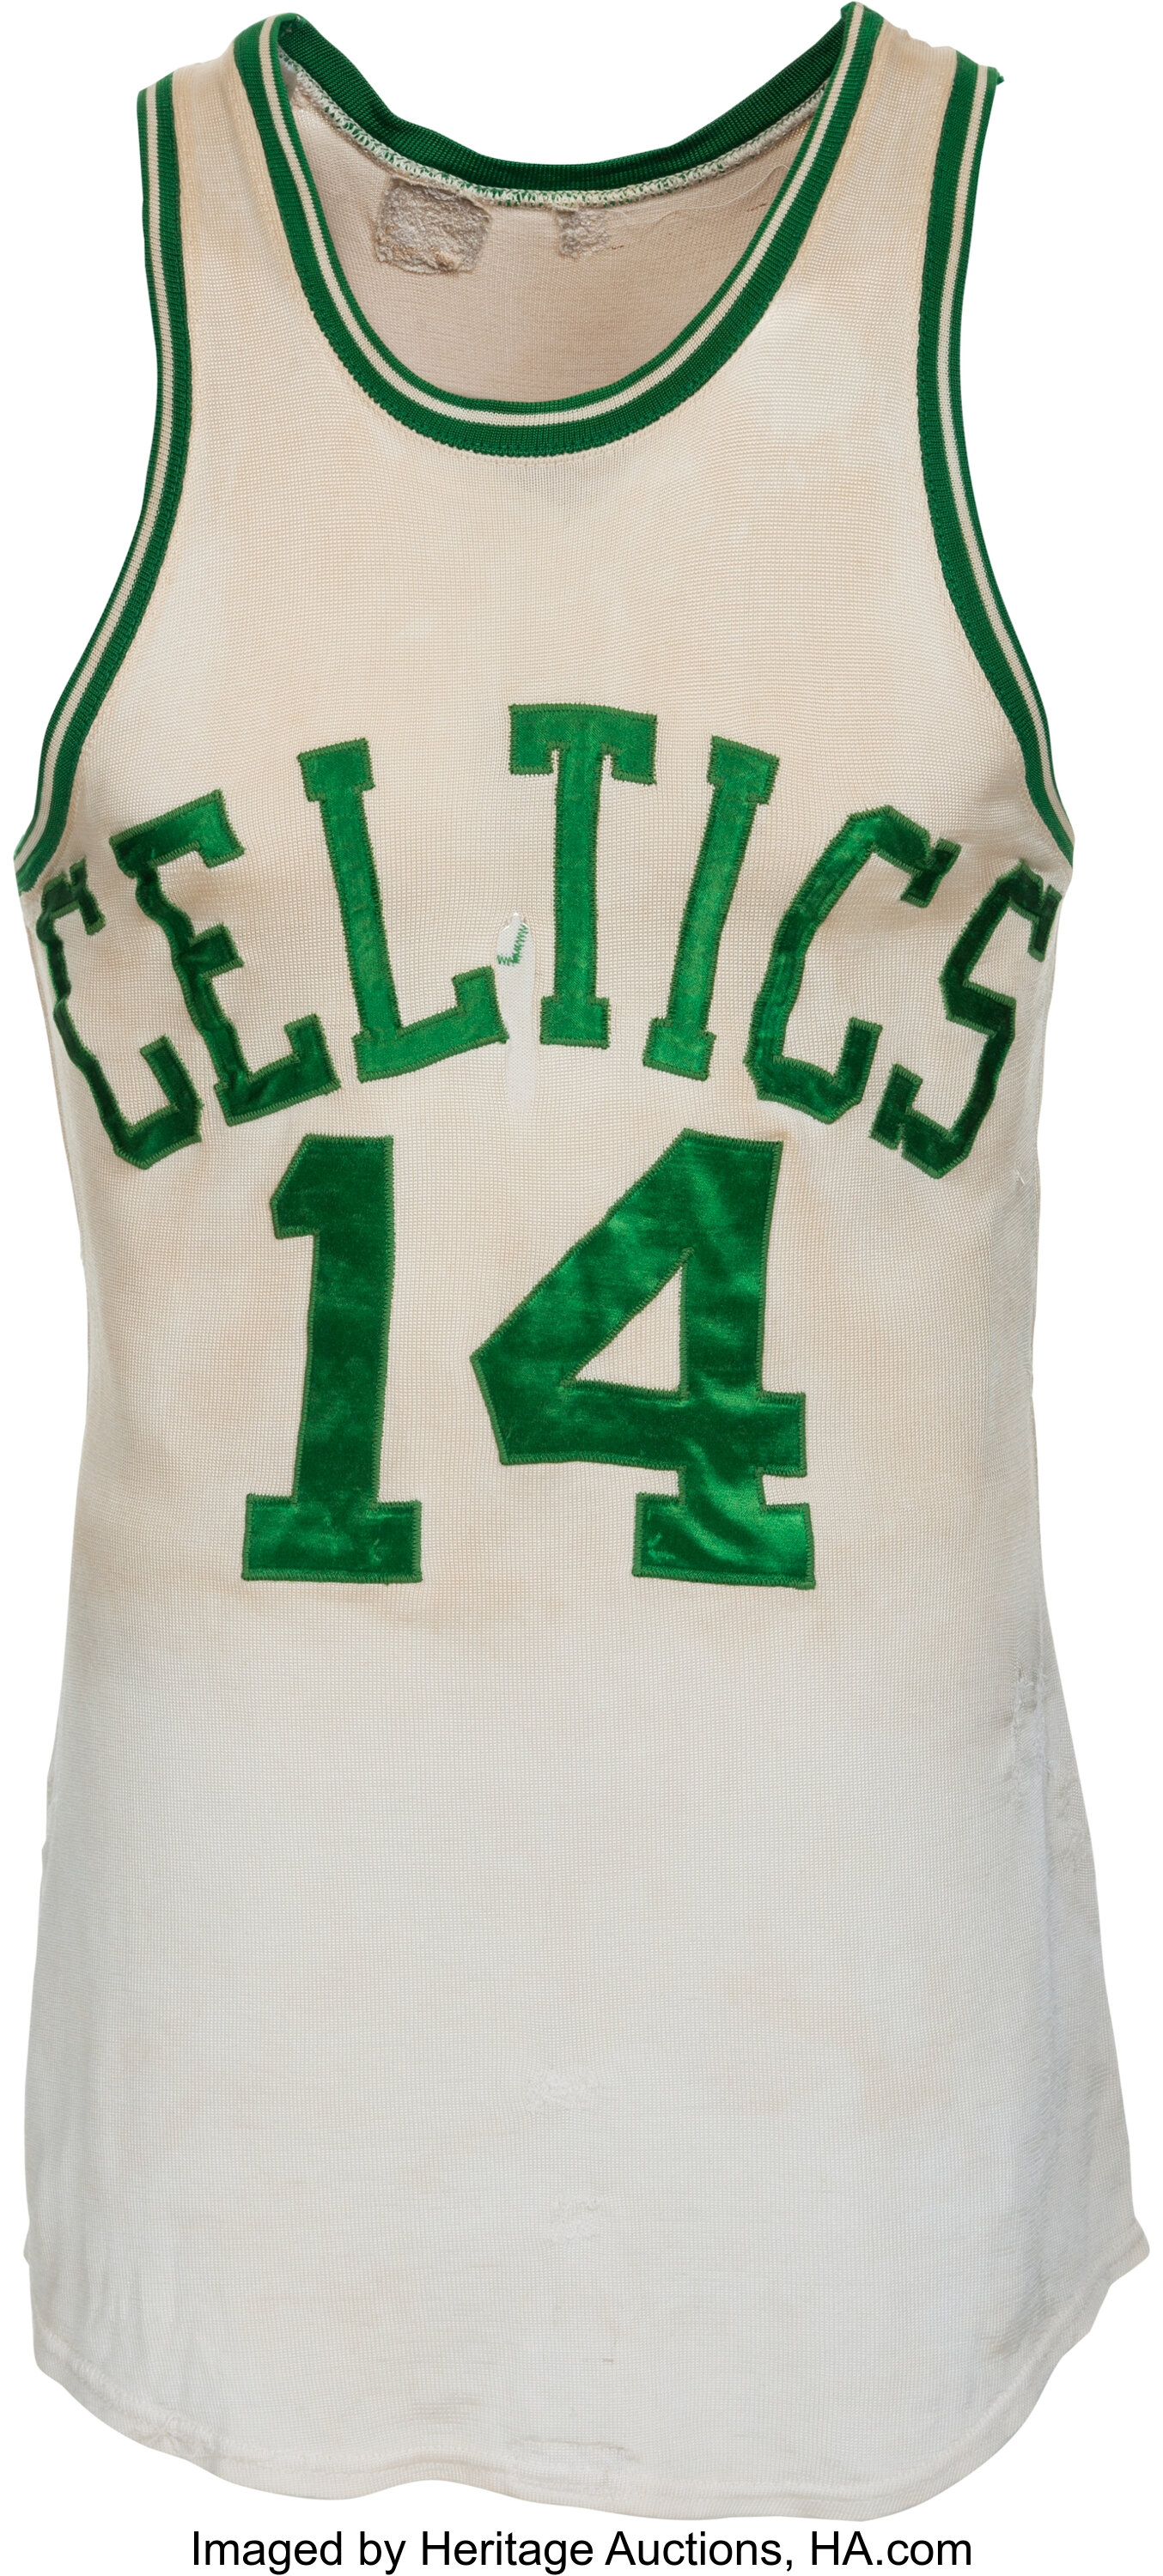 Merch Madness Round of 32: vote on your favorite Celtics jerseys